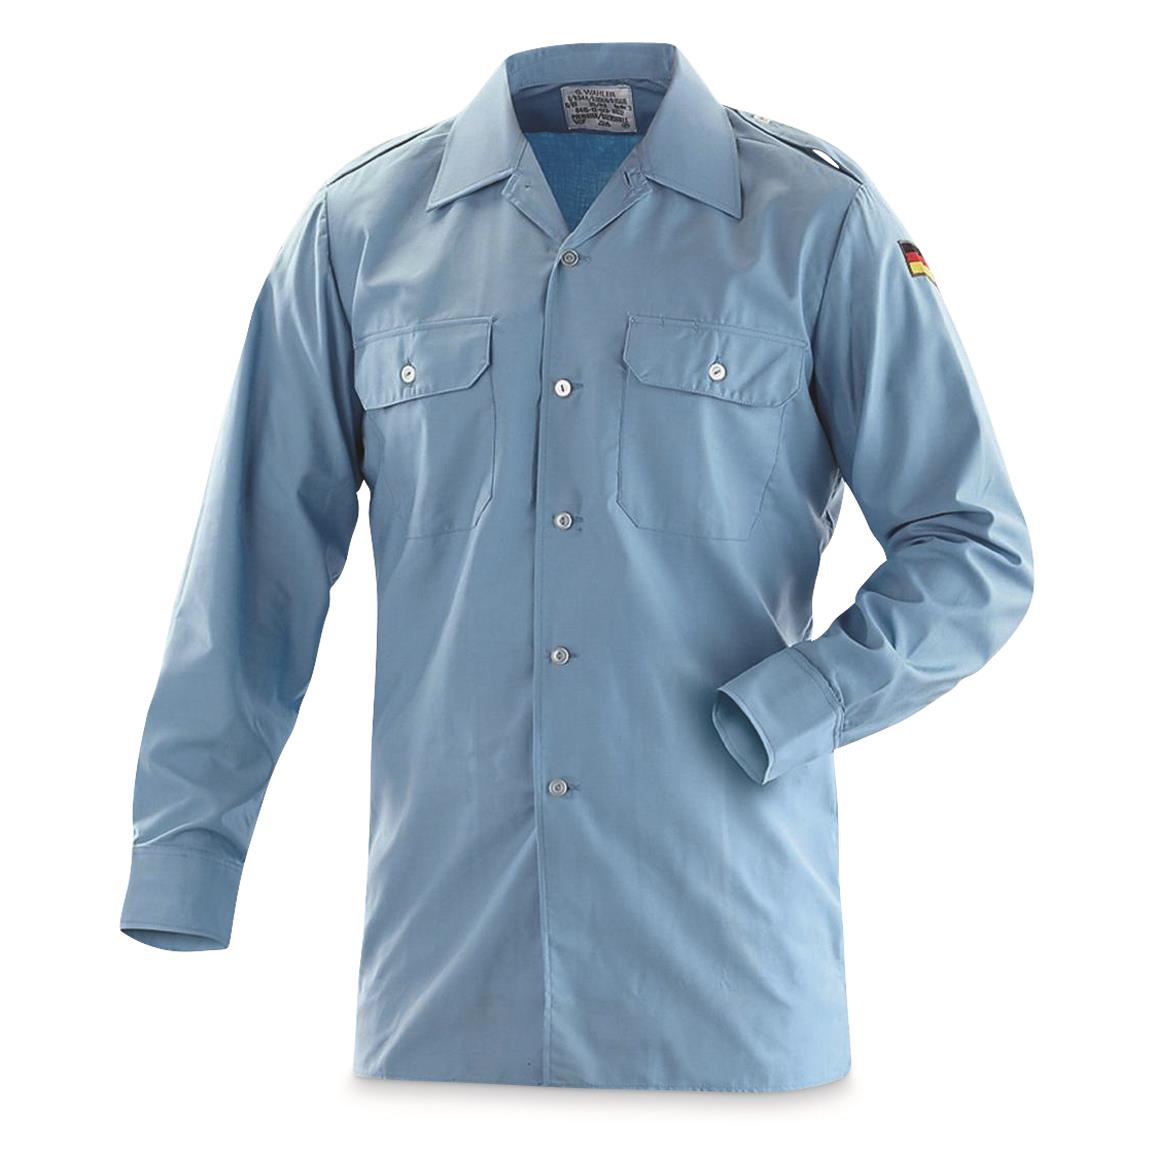 German Military Surplus Long Sleeve Service Shirts, 2 Pack, Used